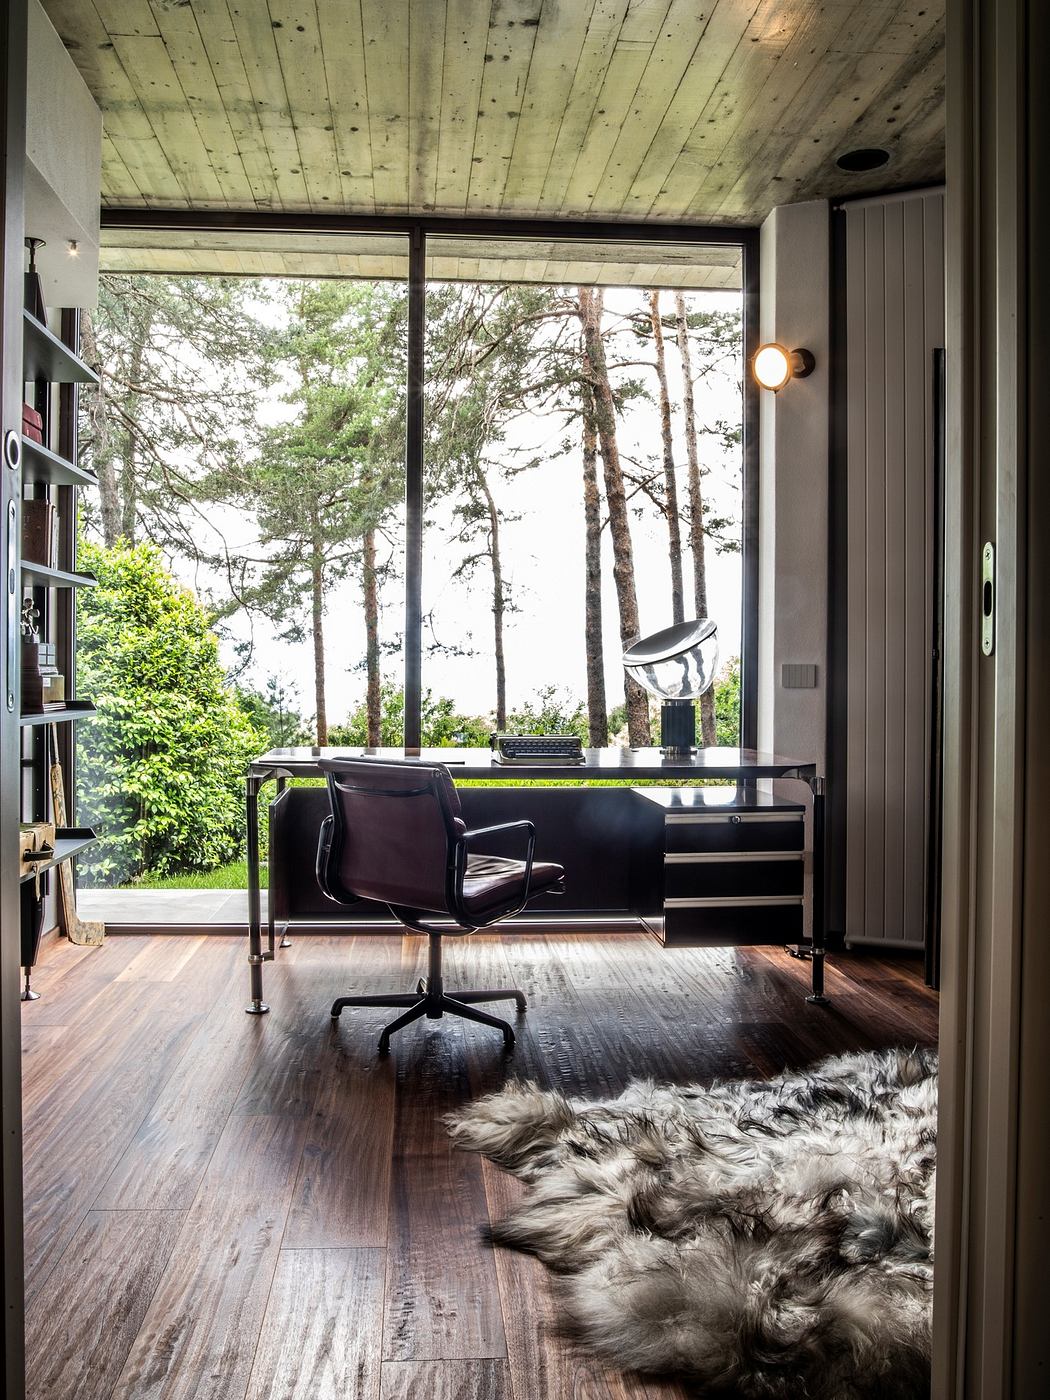 Modern room with large window overlooking trees, hardwood floors, and a fur rug.